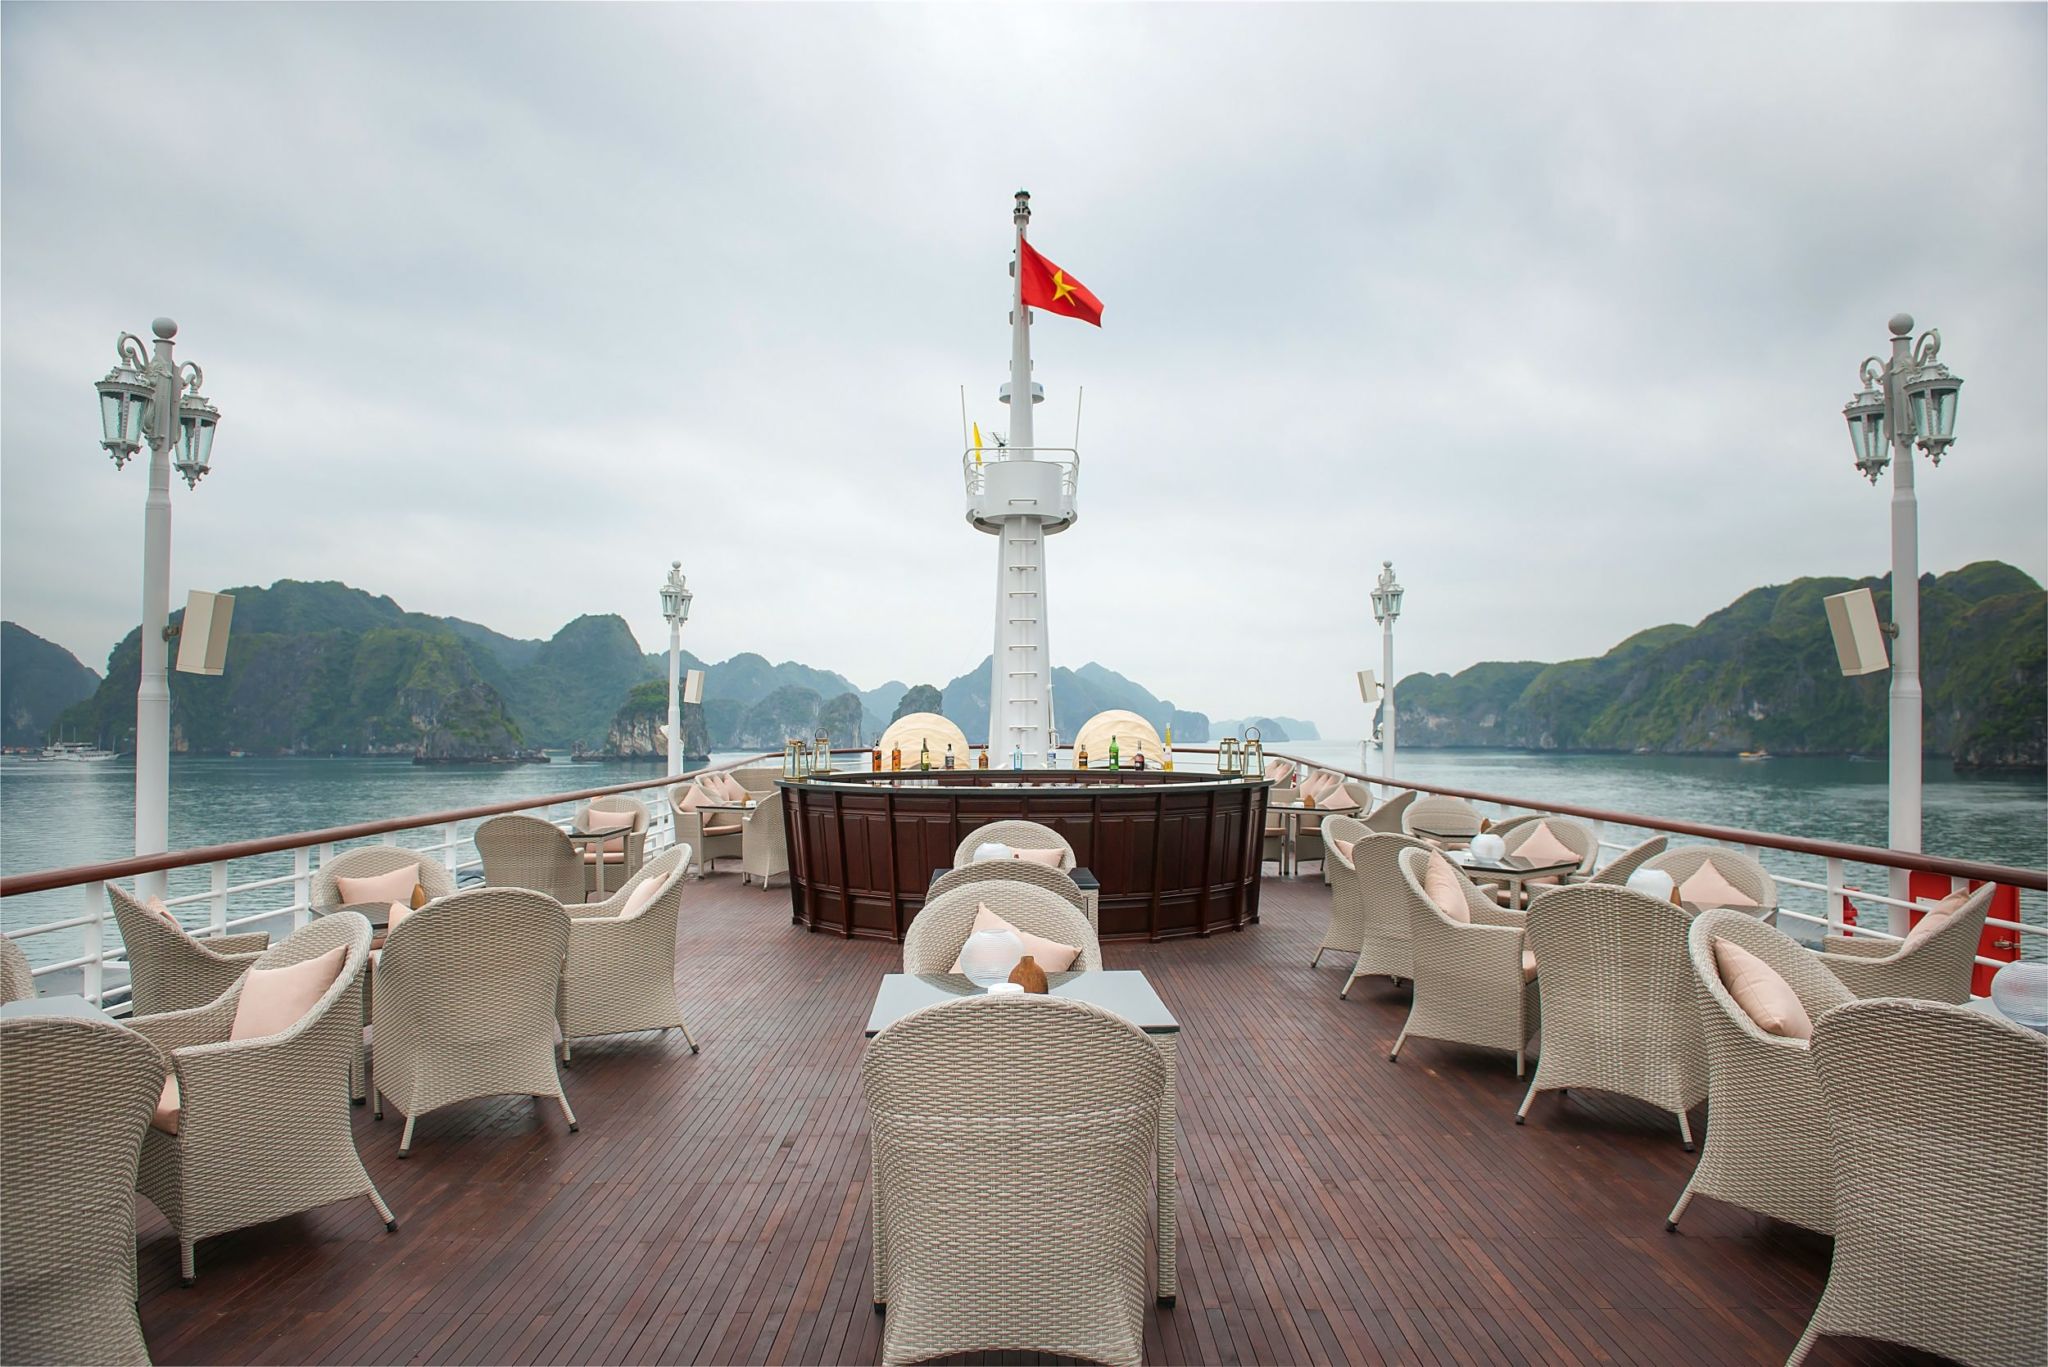 LuxeGetaways - Luxury Travel - Luxury Travel Magazine - Luxe Getaways - Luxury Lifestyle - Paradise Elegance Vietnam - River Cruise - Sundeck